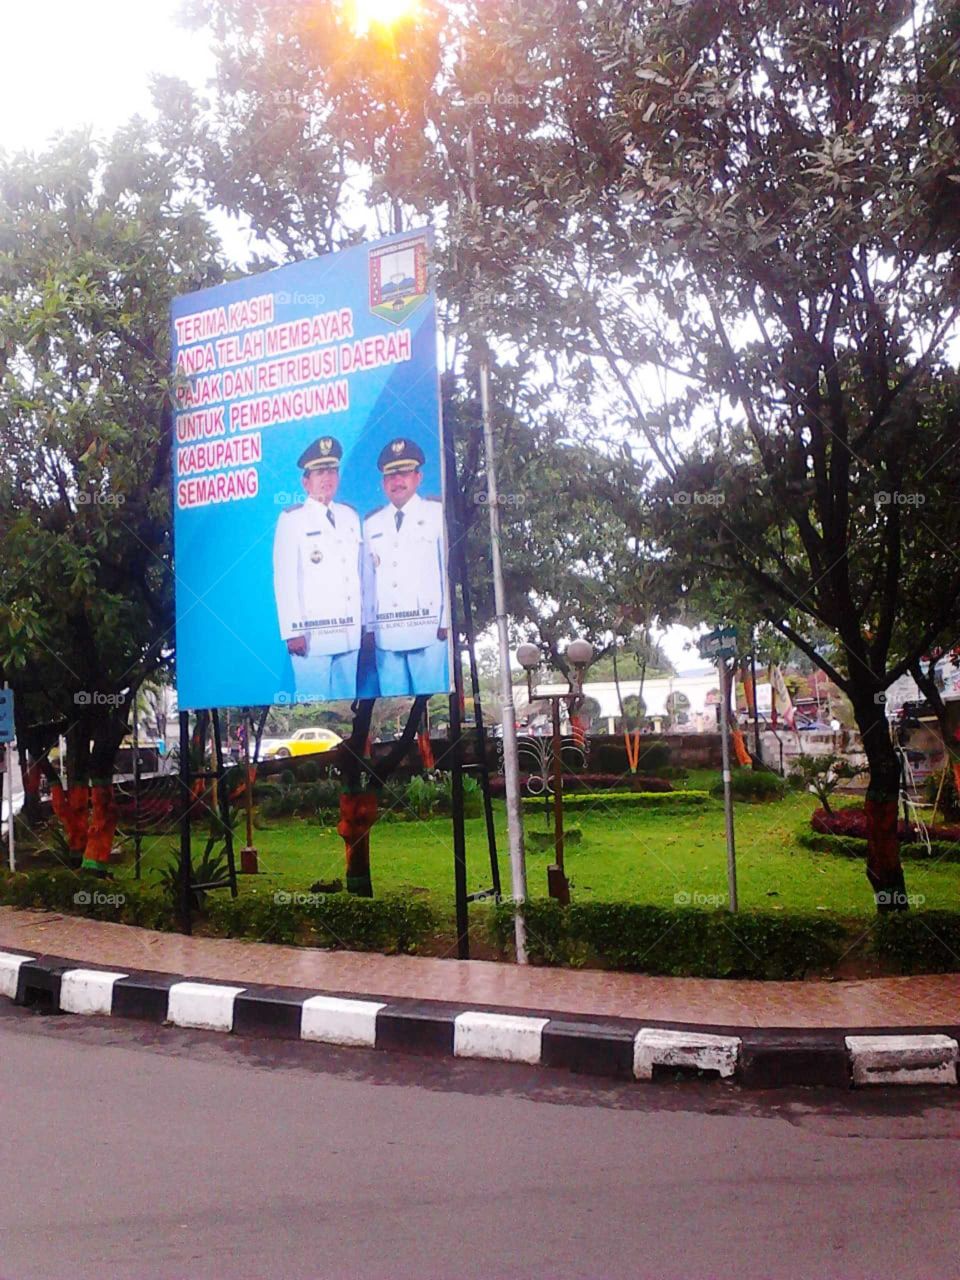 Semarang, Central Java, Indonesia 🌇🐇